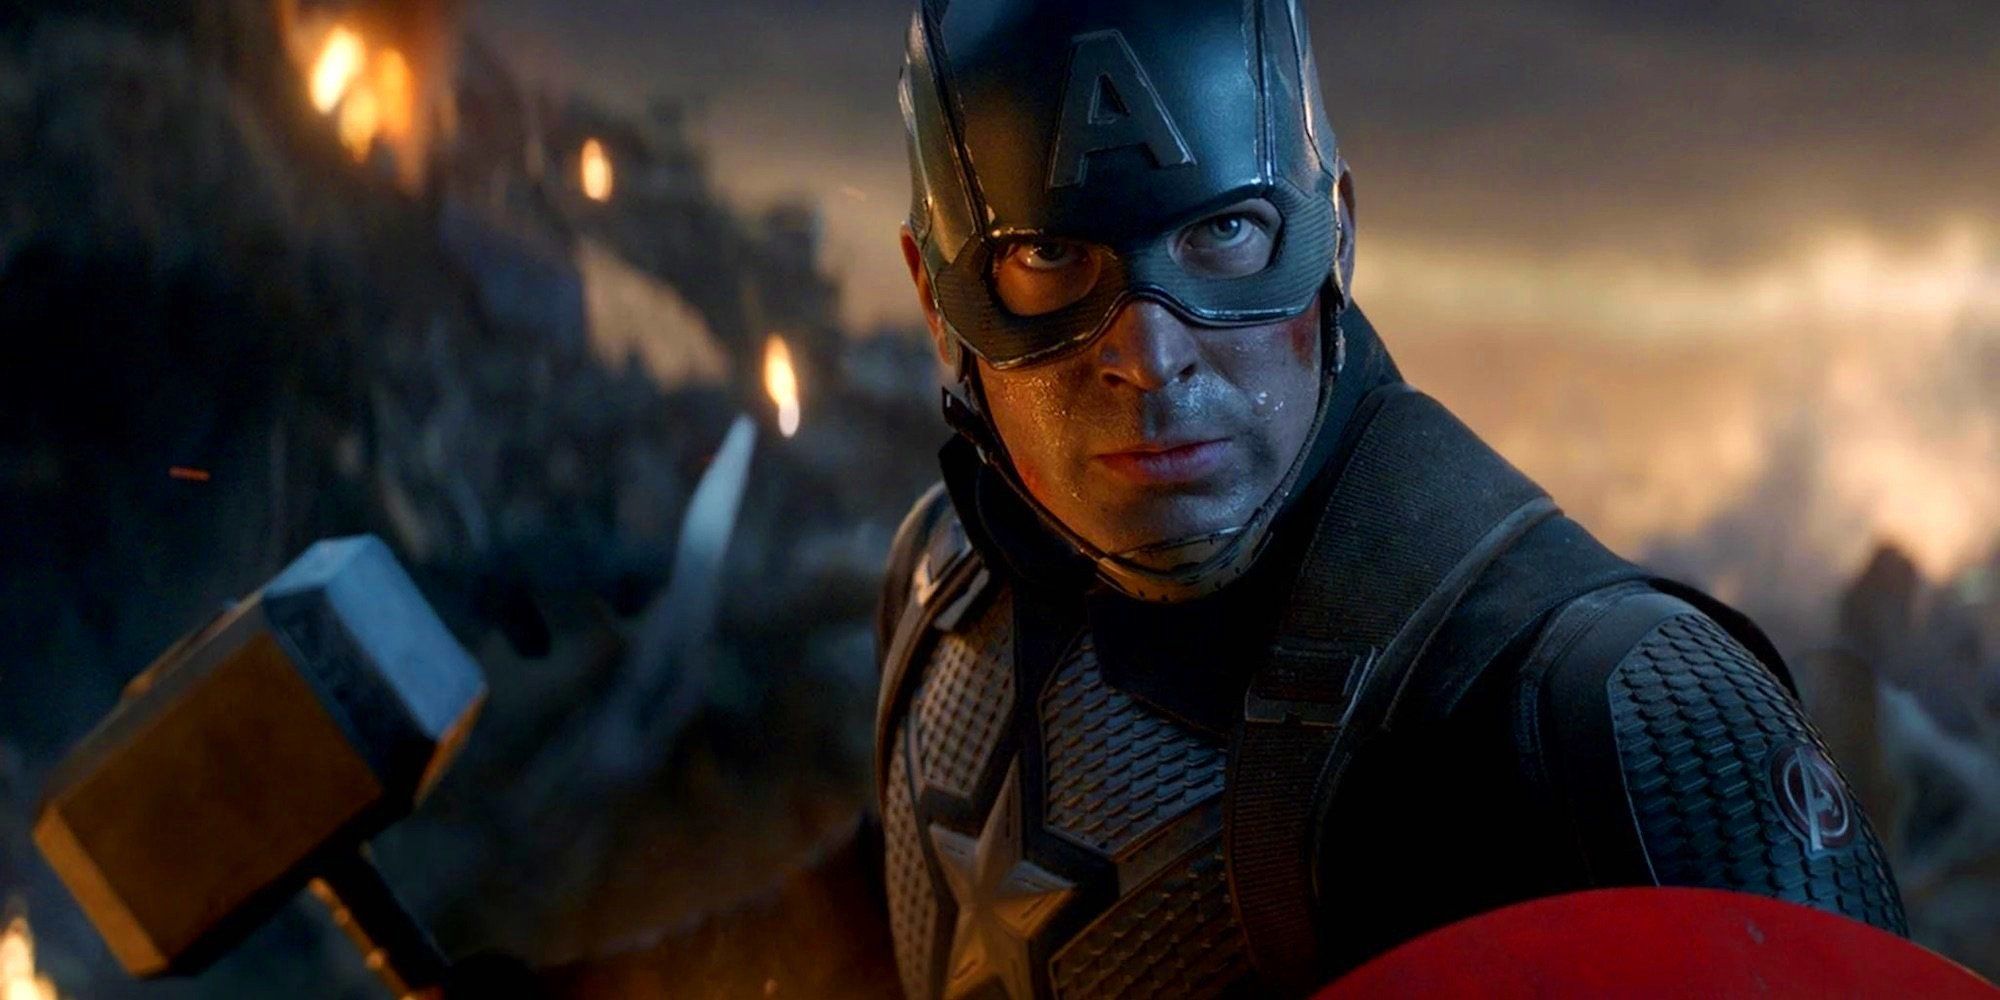 Captain America Fights Thanos in Avengers: Endgame